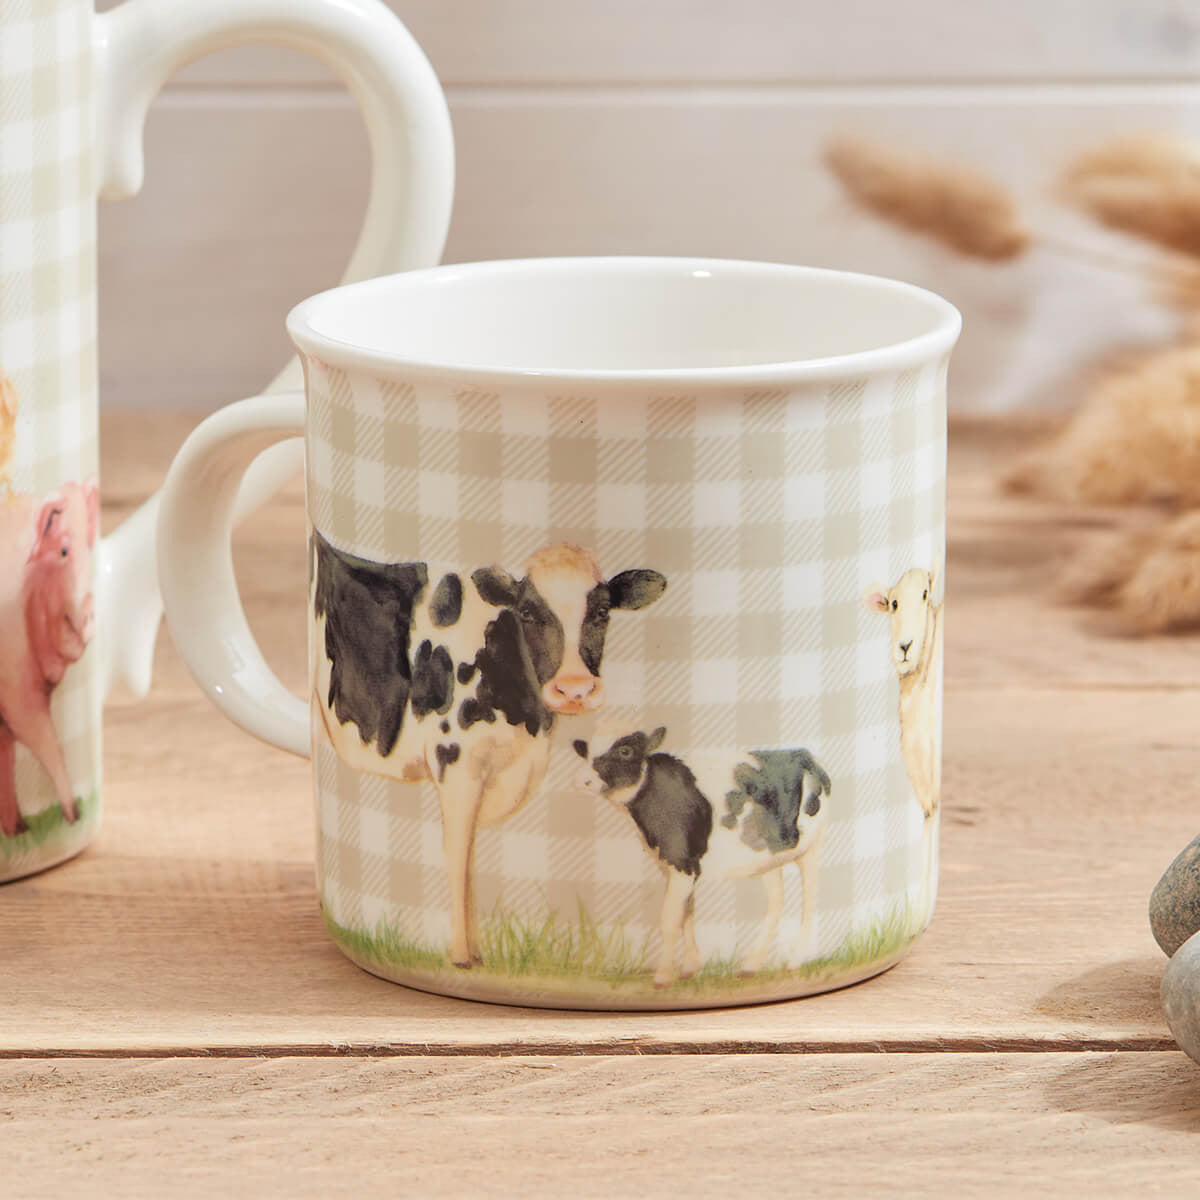 Farm Animal Mug Taupe Gingham Stoneware with Cows, Sheep and Pig